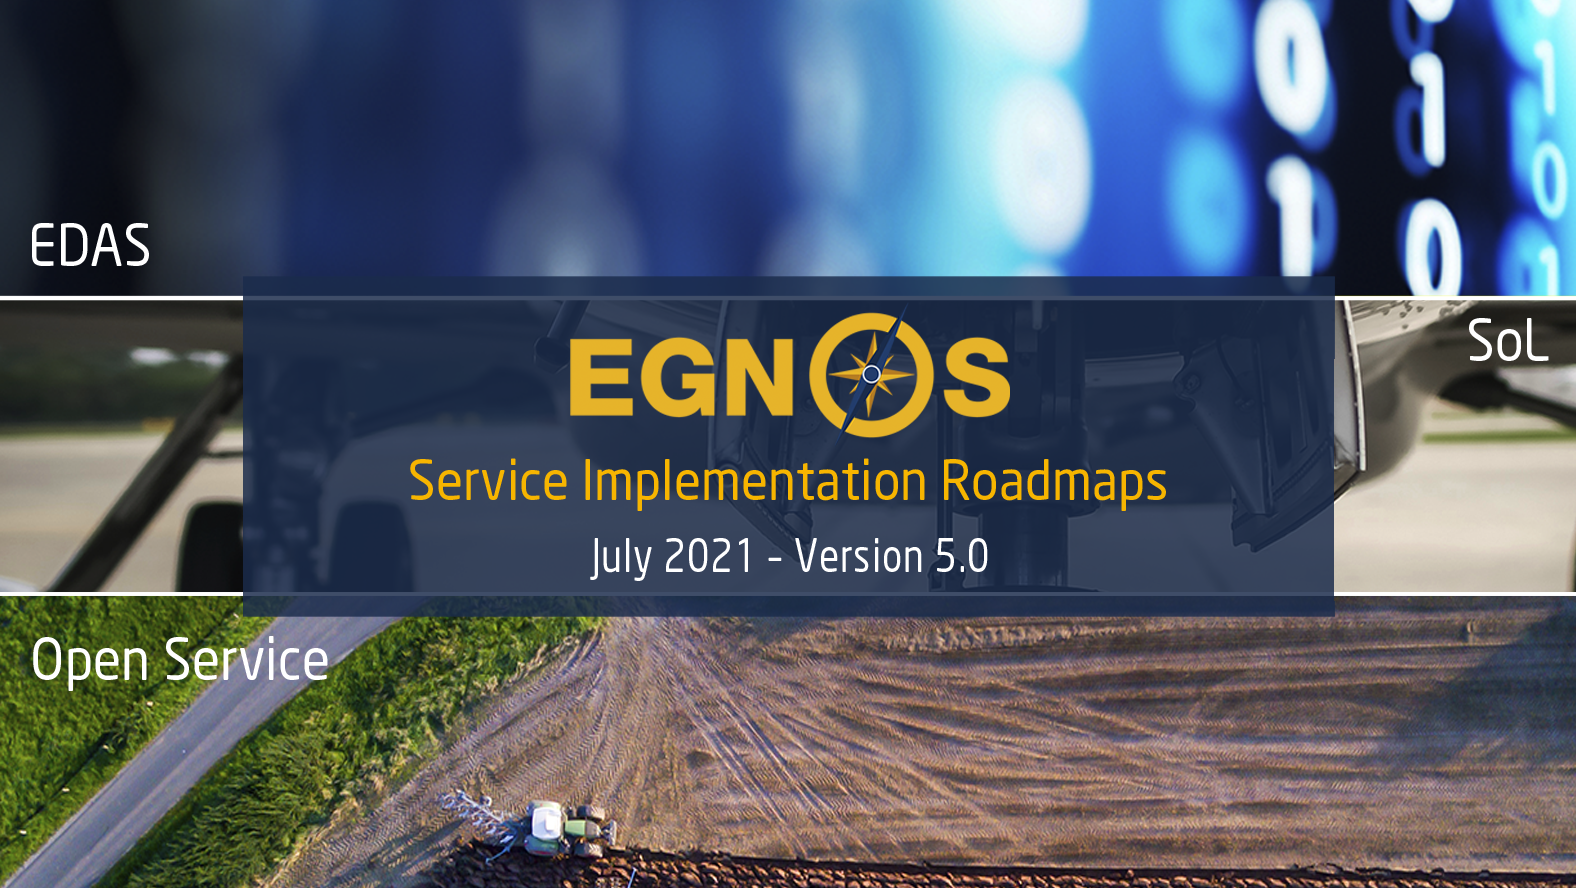 EGNOS Service Implementation Roadmaps: New version 5.0 released